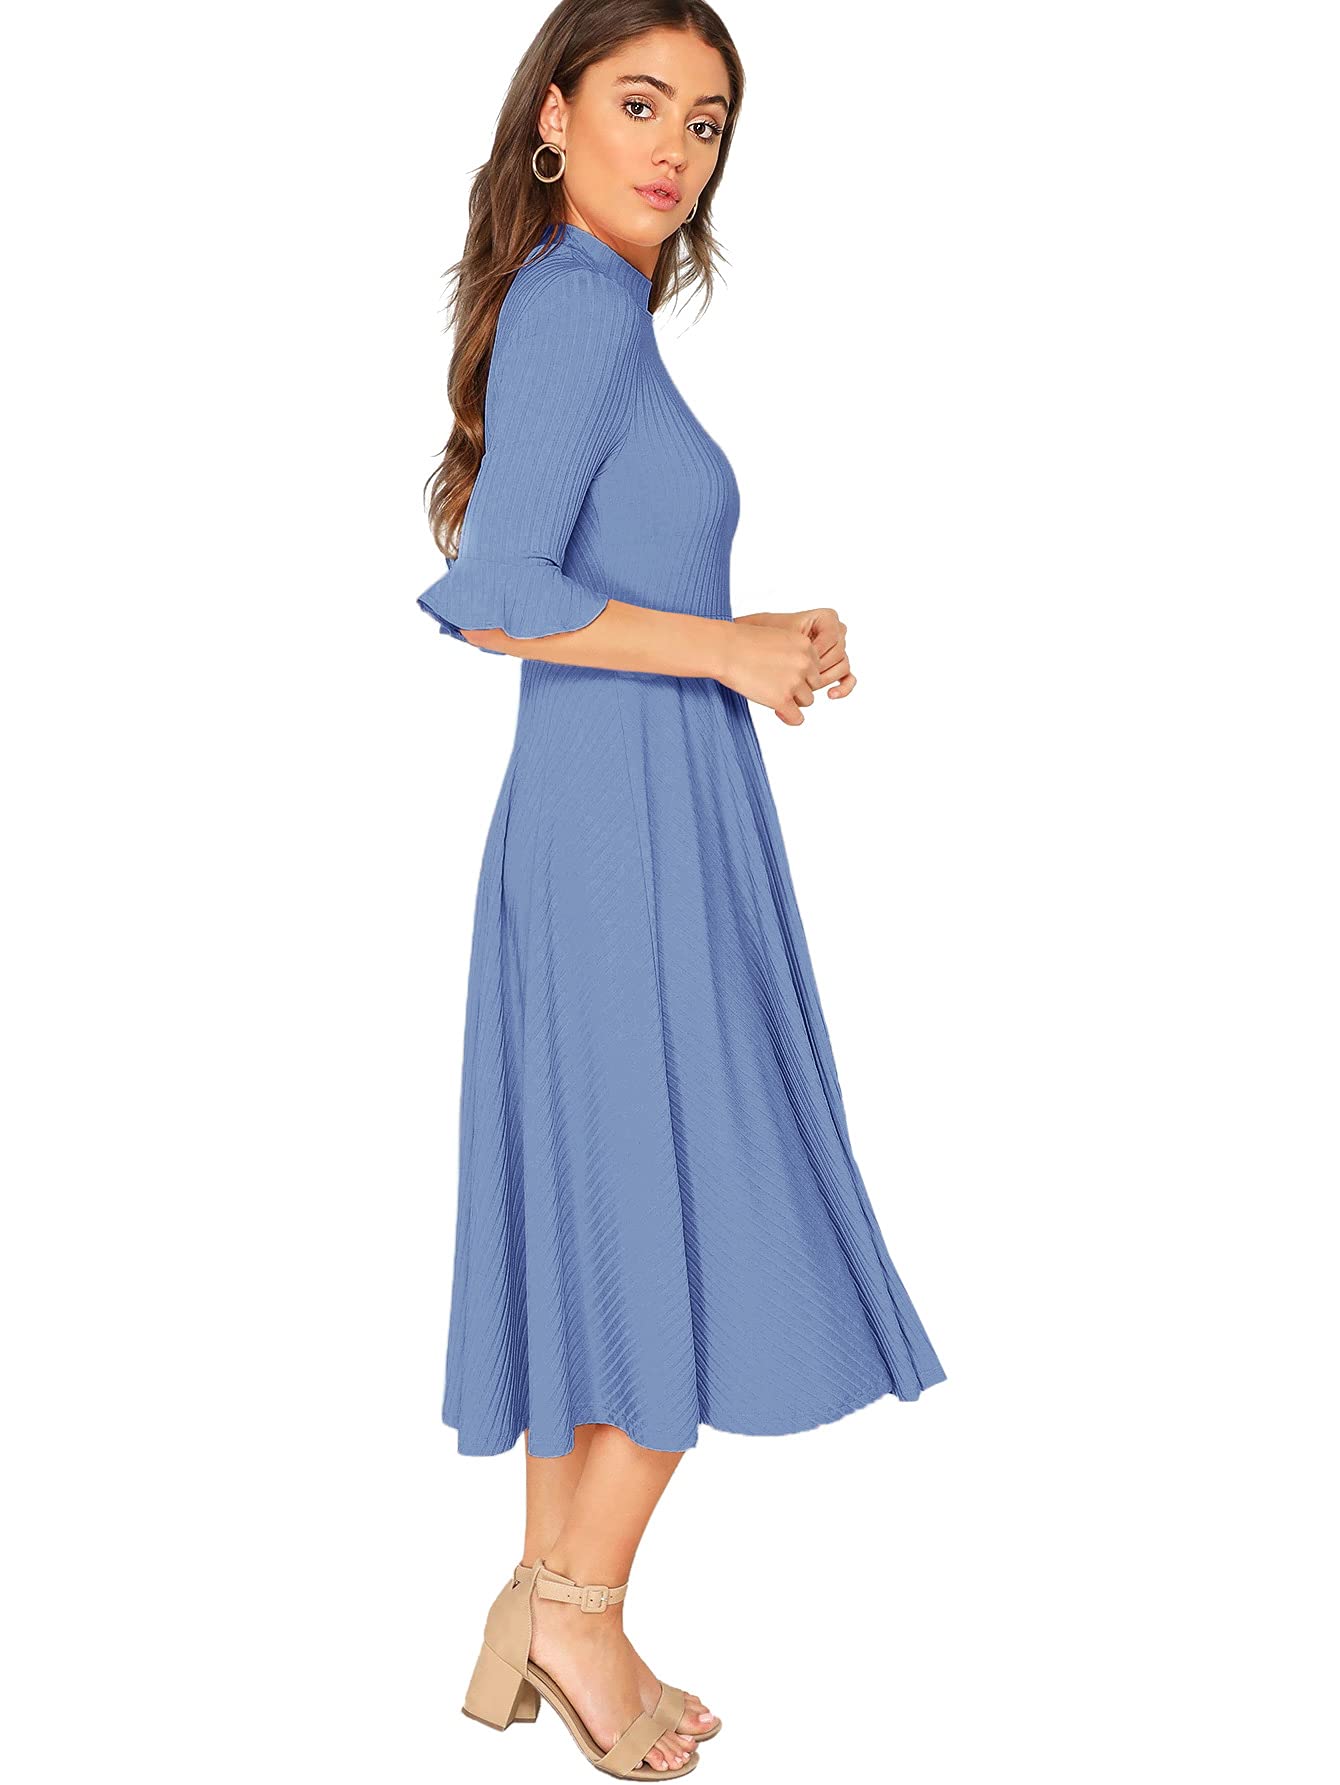 Verdusa Women's Elegant Ribbed Knit Bell Sleeve Fit and Flare Midi Dress Slate Blue S